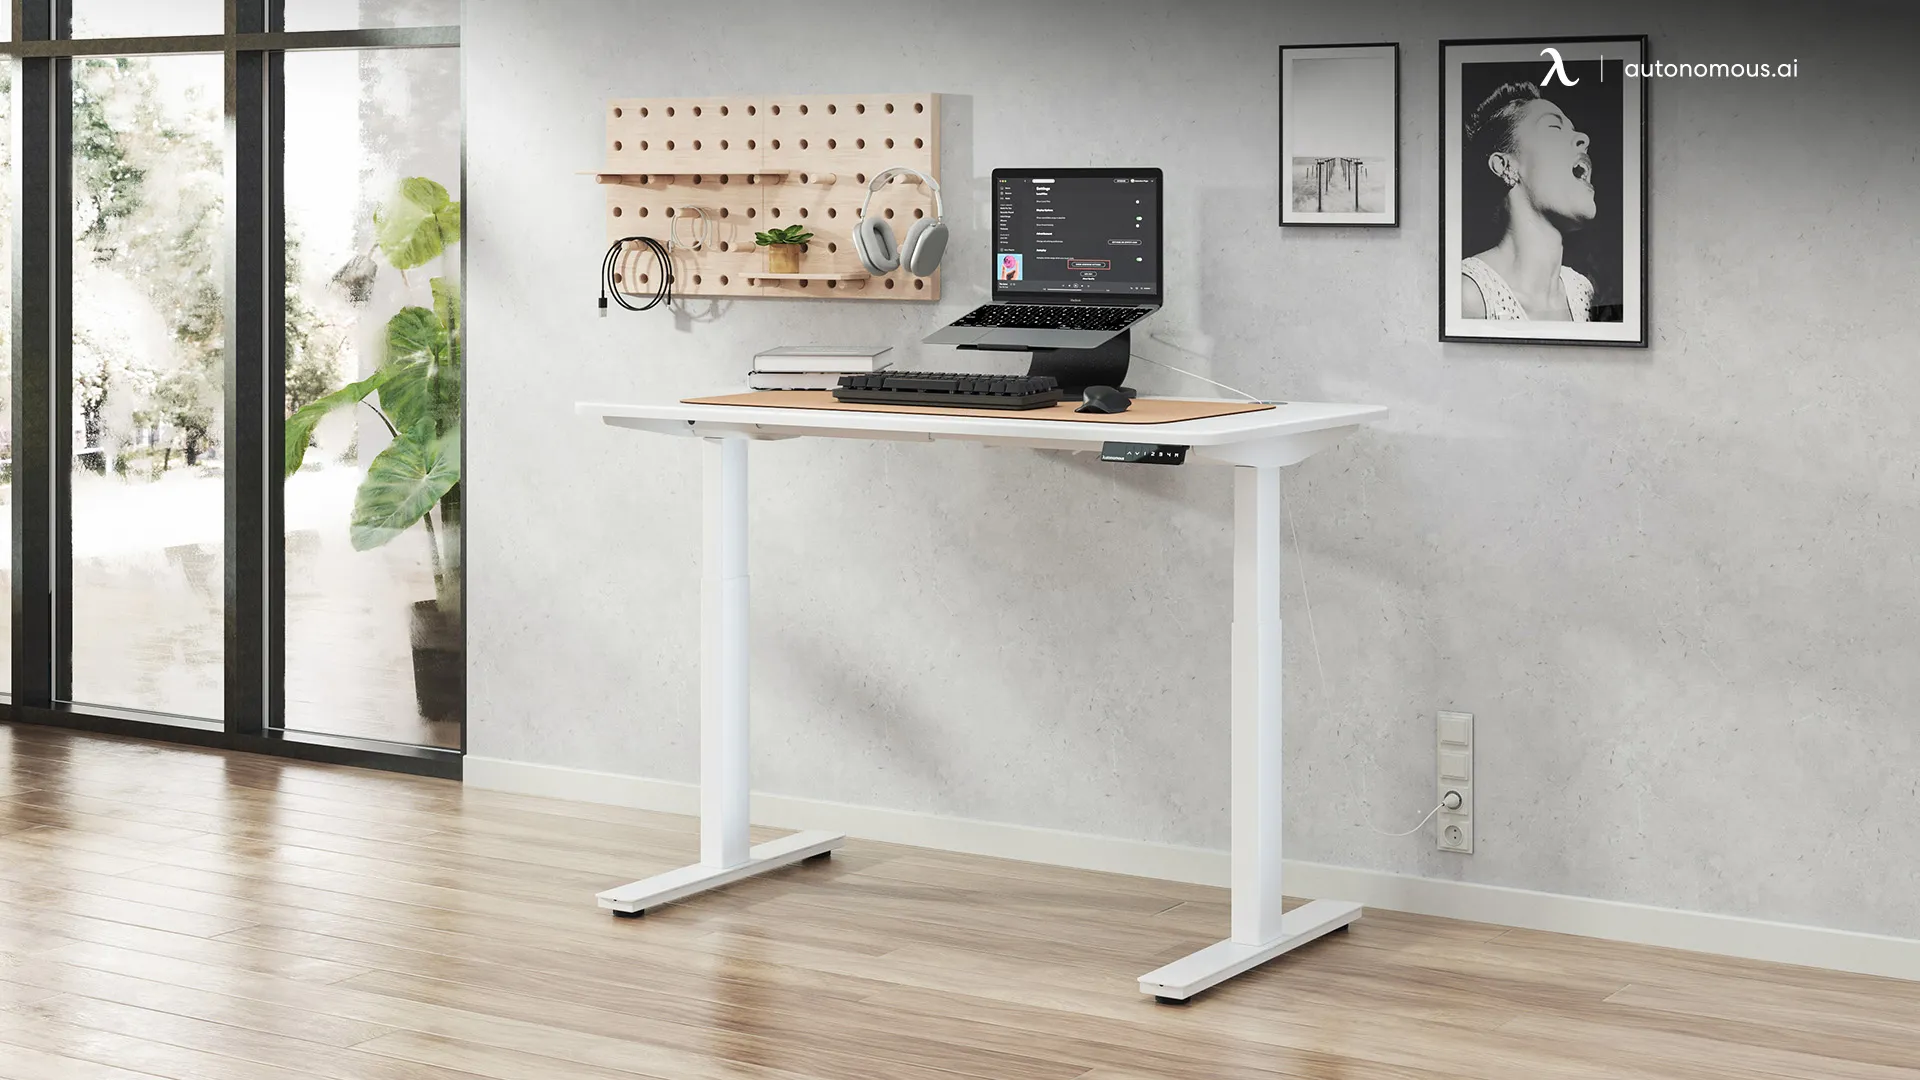 How to Reset an Autonomous Standing Desk?